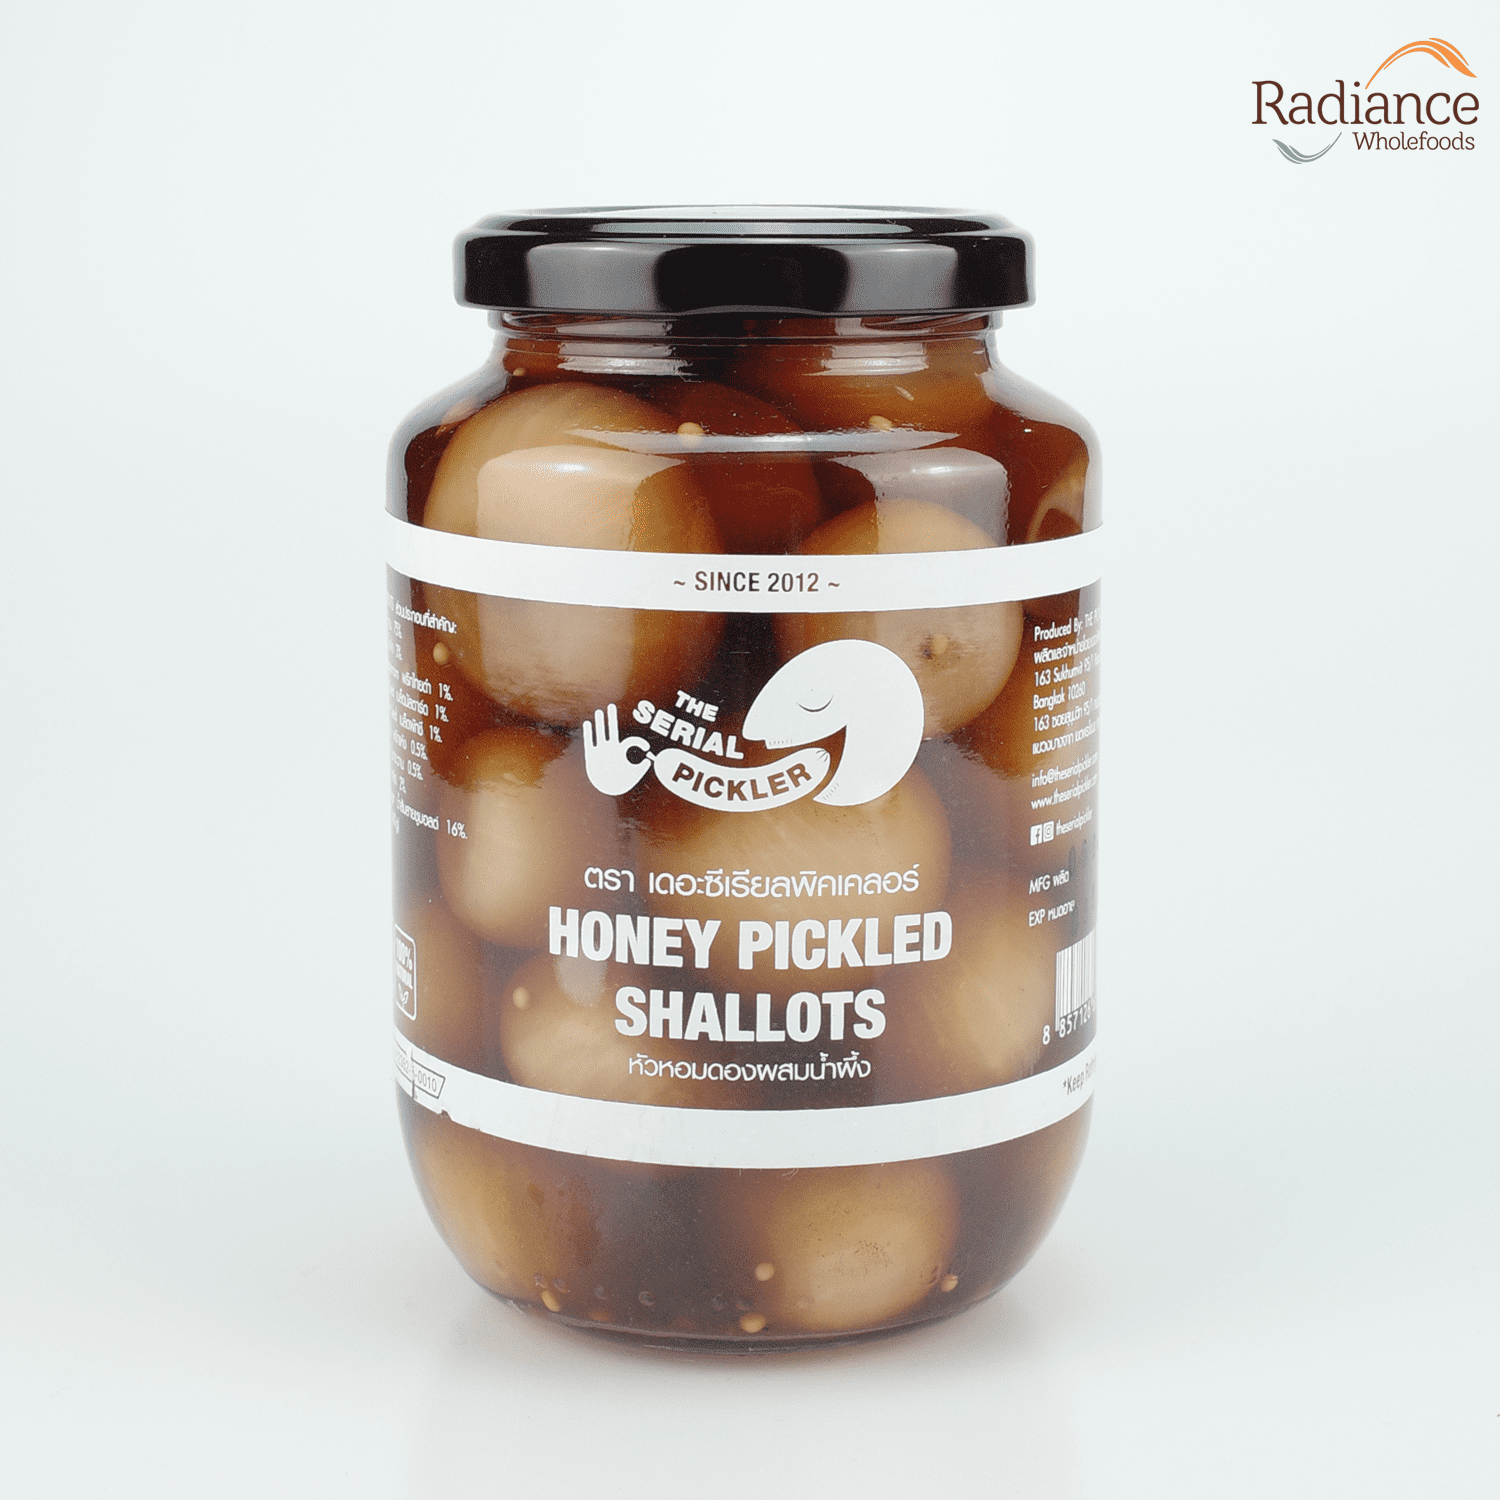 Honey Pickled shallots 480g,The Serial Pickler